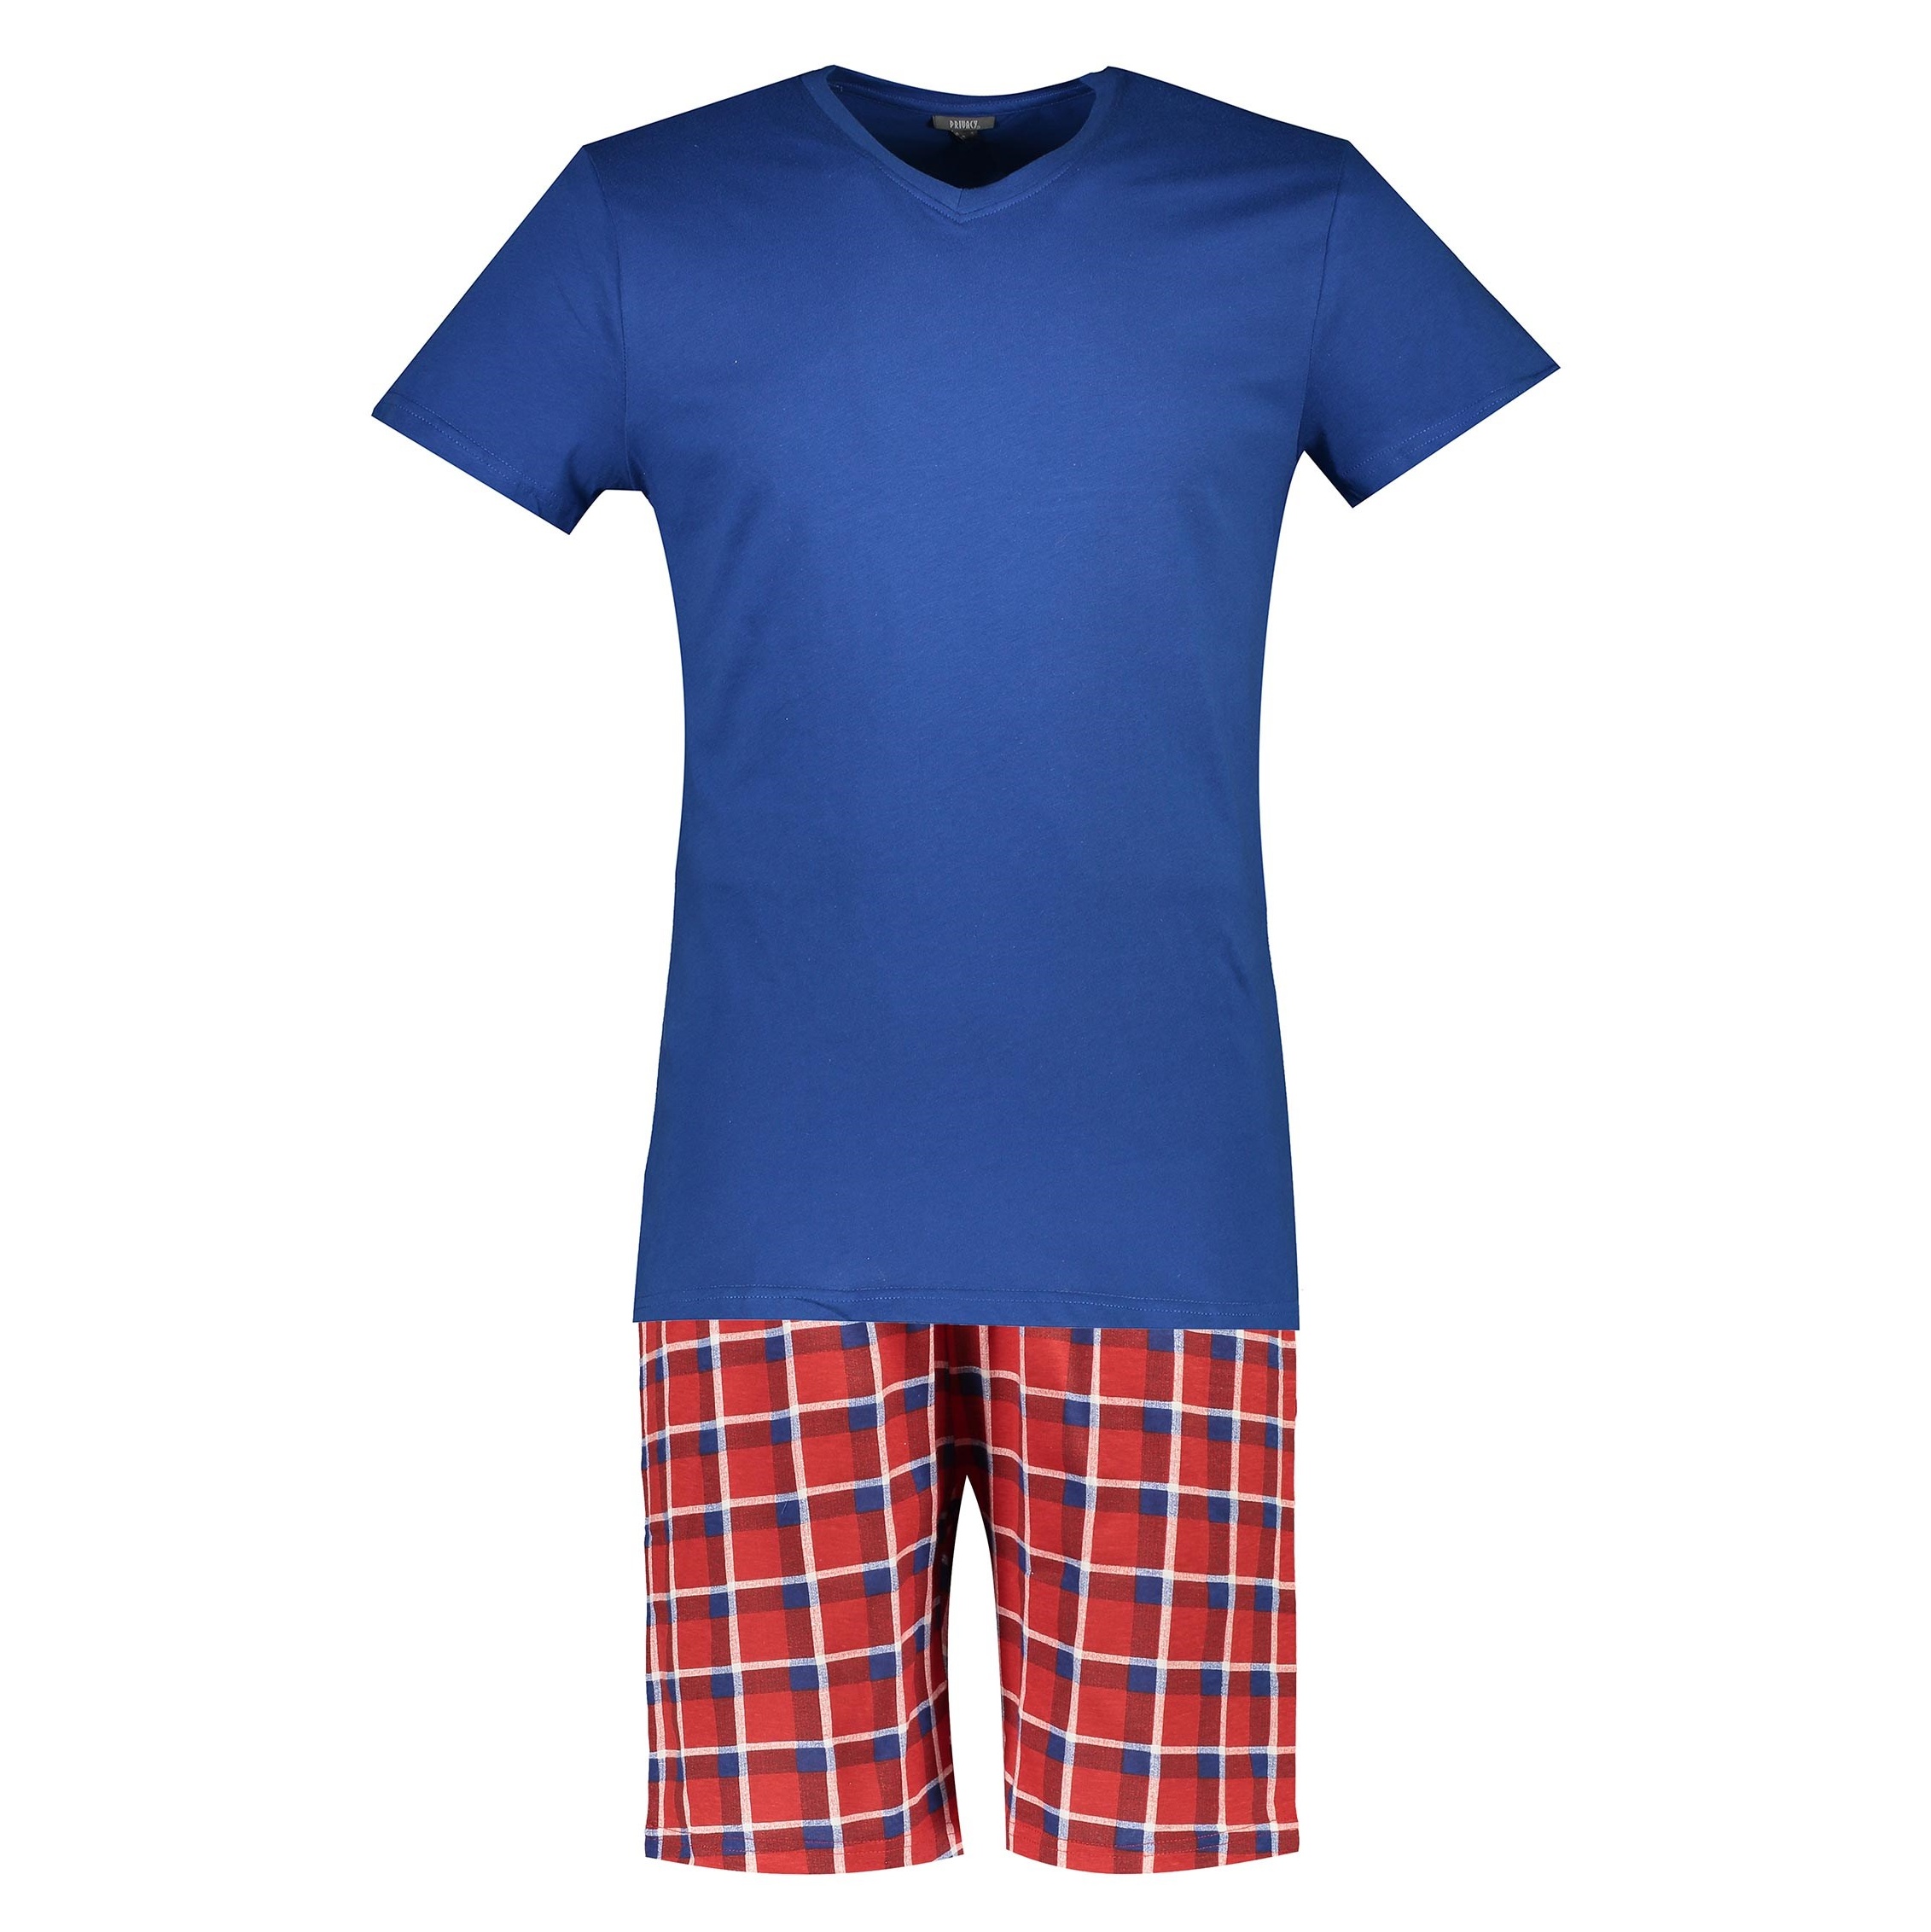 تی شرت و شلوارک نخی پسرانه - یوپیم - قرمز/آبي - 1